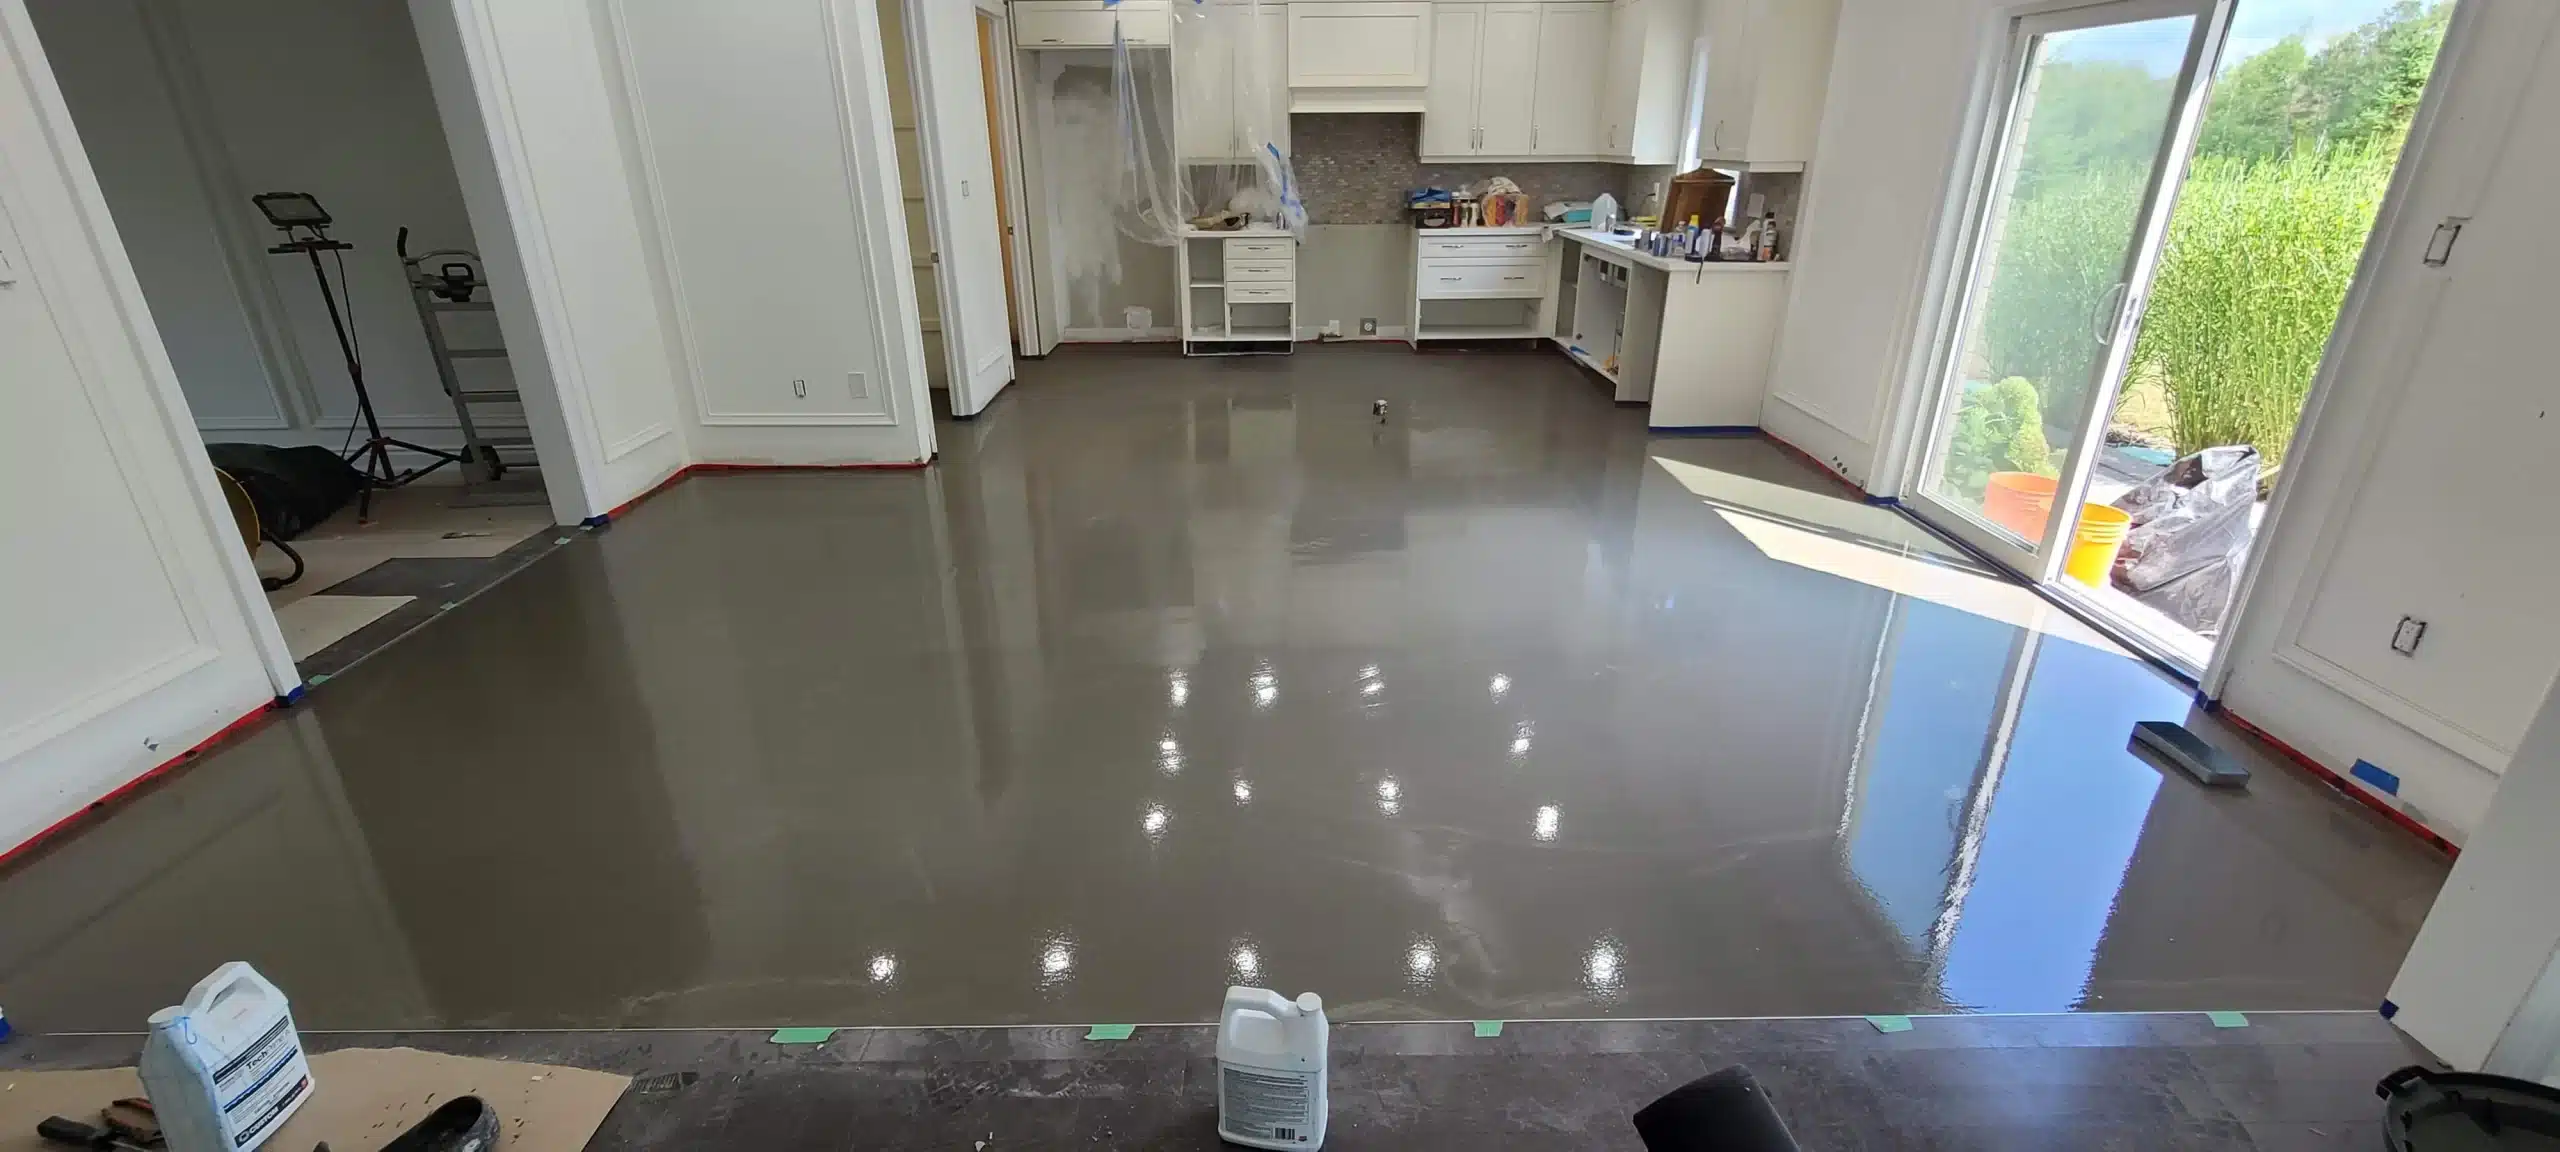 Residential Kitchen Floor Before